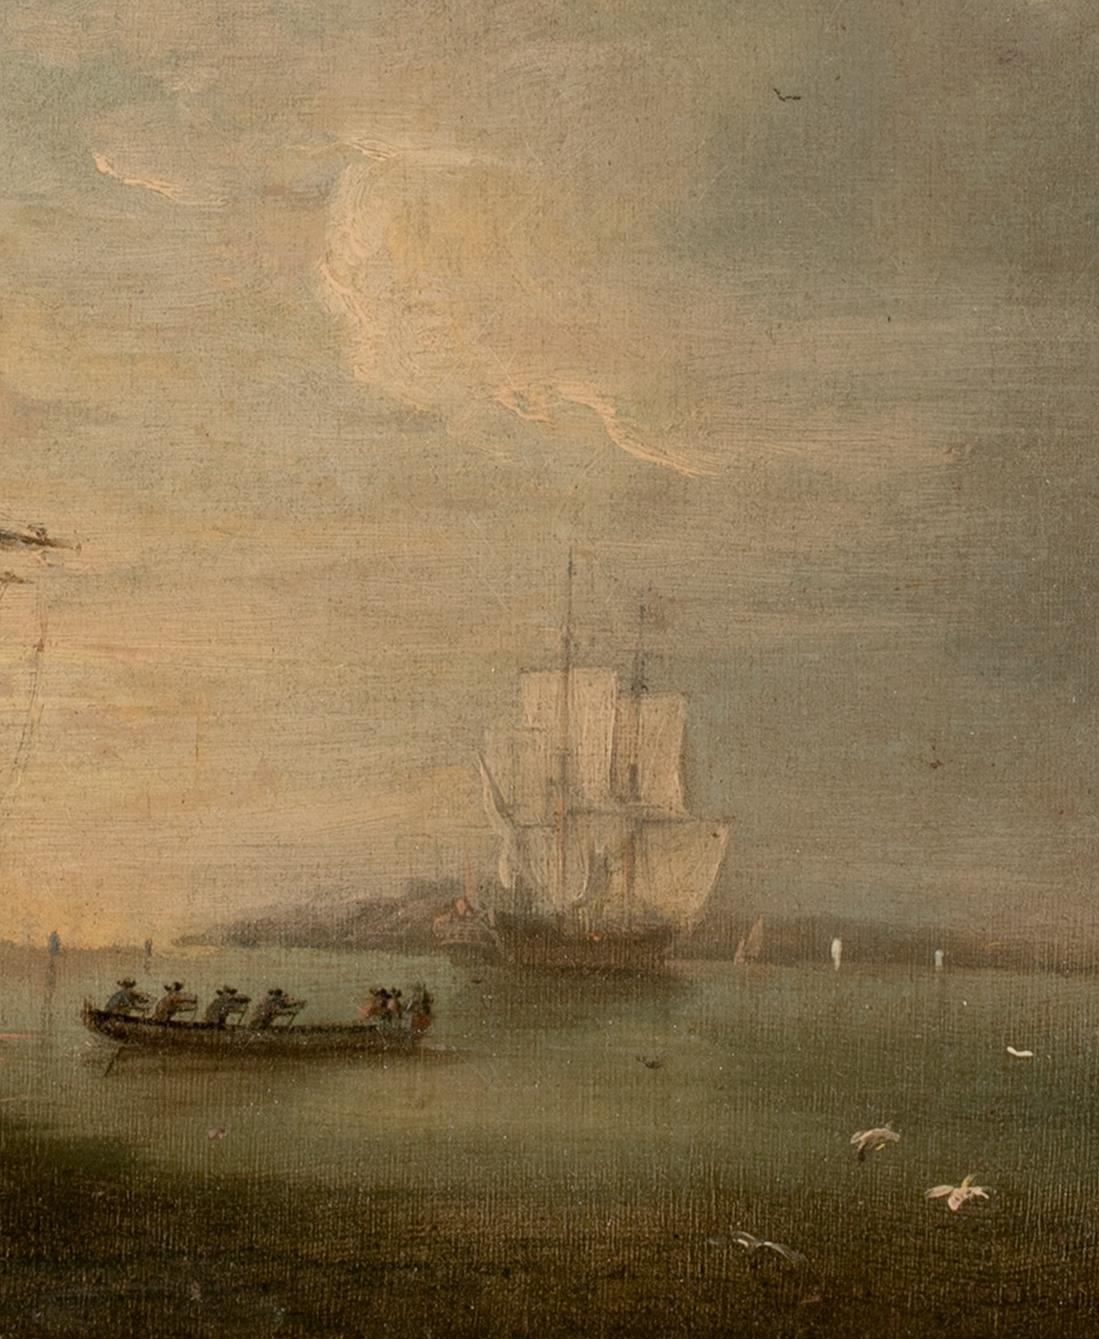 British Royal Navy Fleet Anchored Off The Coast At Sunset, 17th Century  1